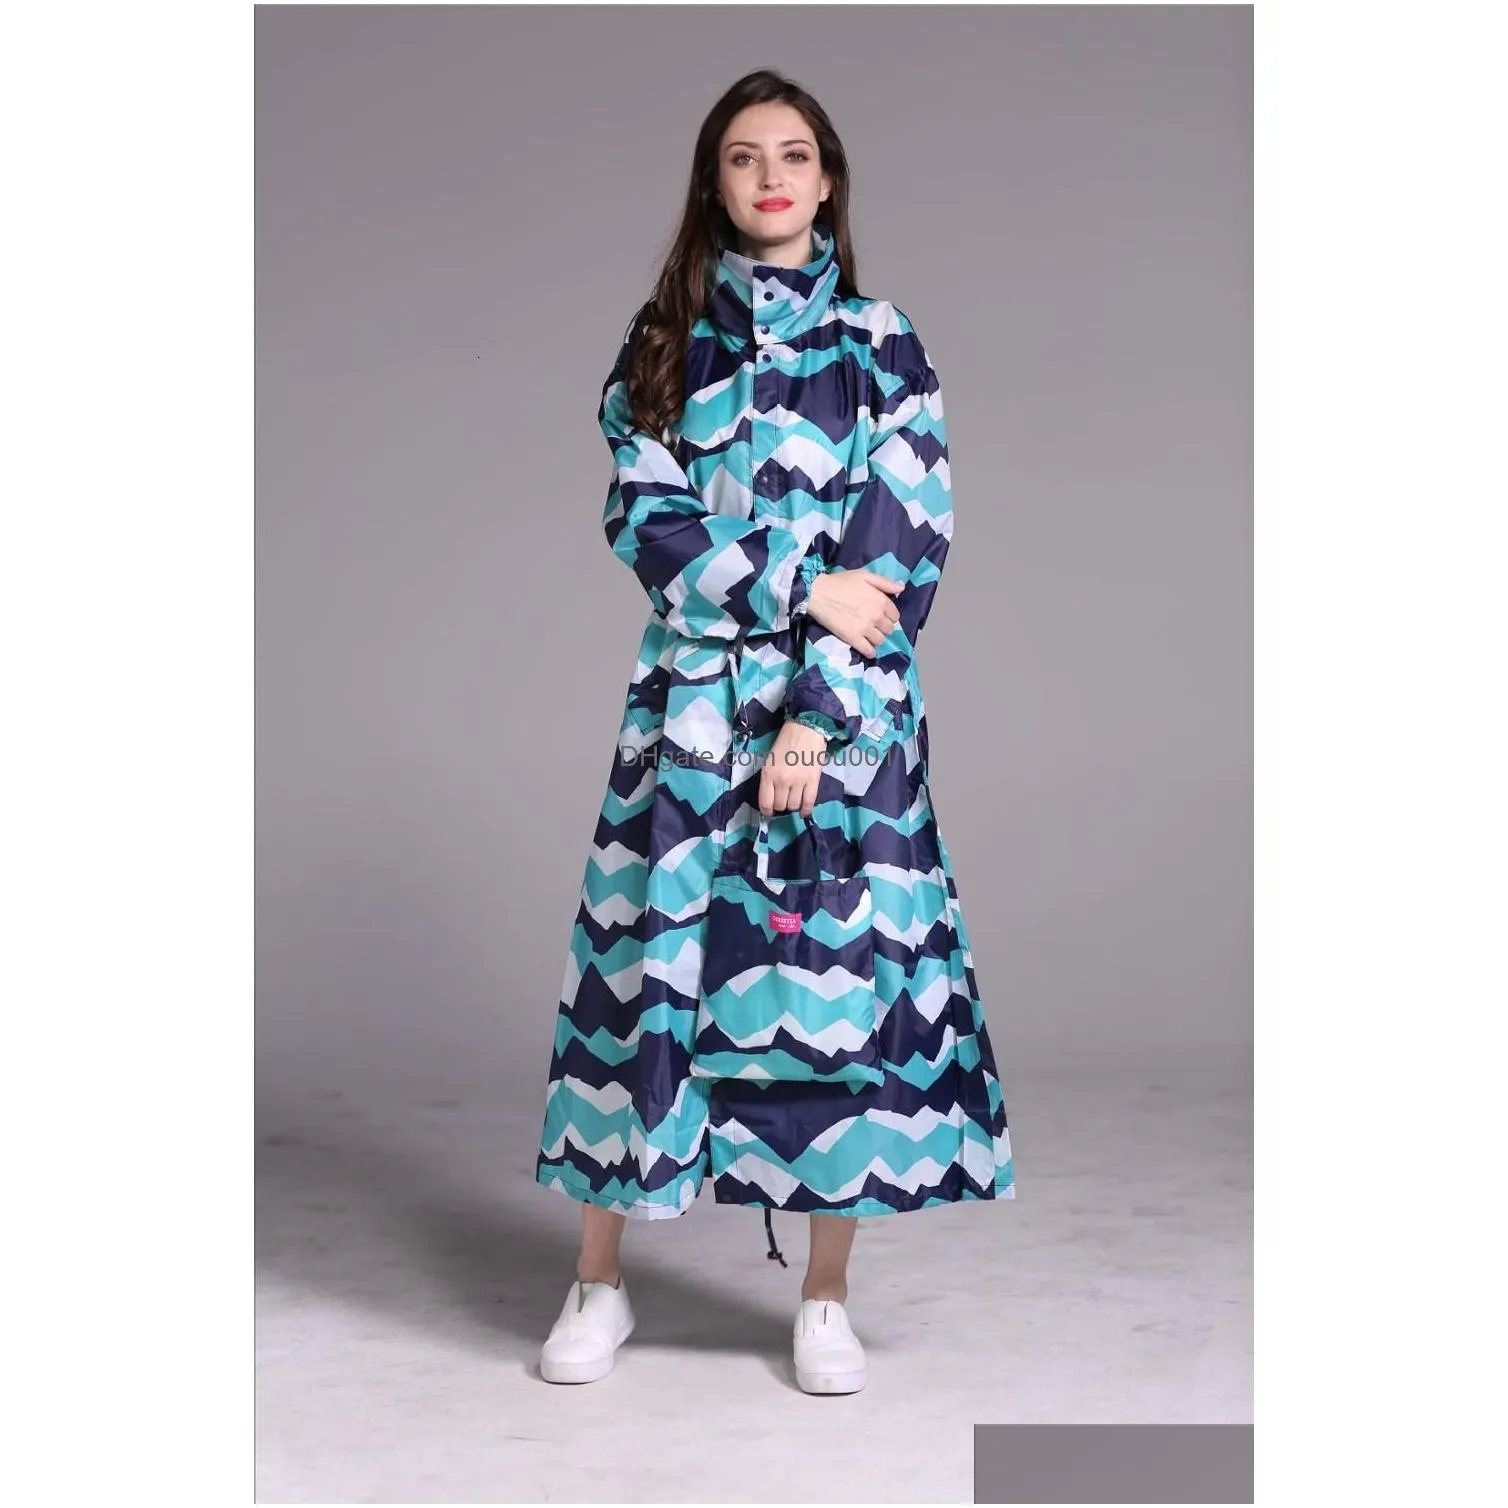 Rain Wear Fashion Lengthen Men And Women Raincoat Thin Poncho Ladies Waterproof Long Breathable Jacket Adts Raincoats Drop Delivery Dhqbk